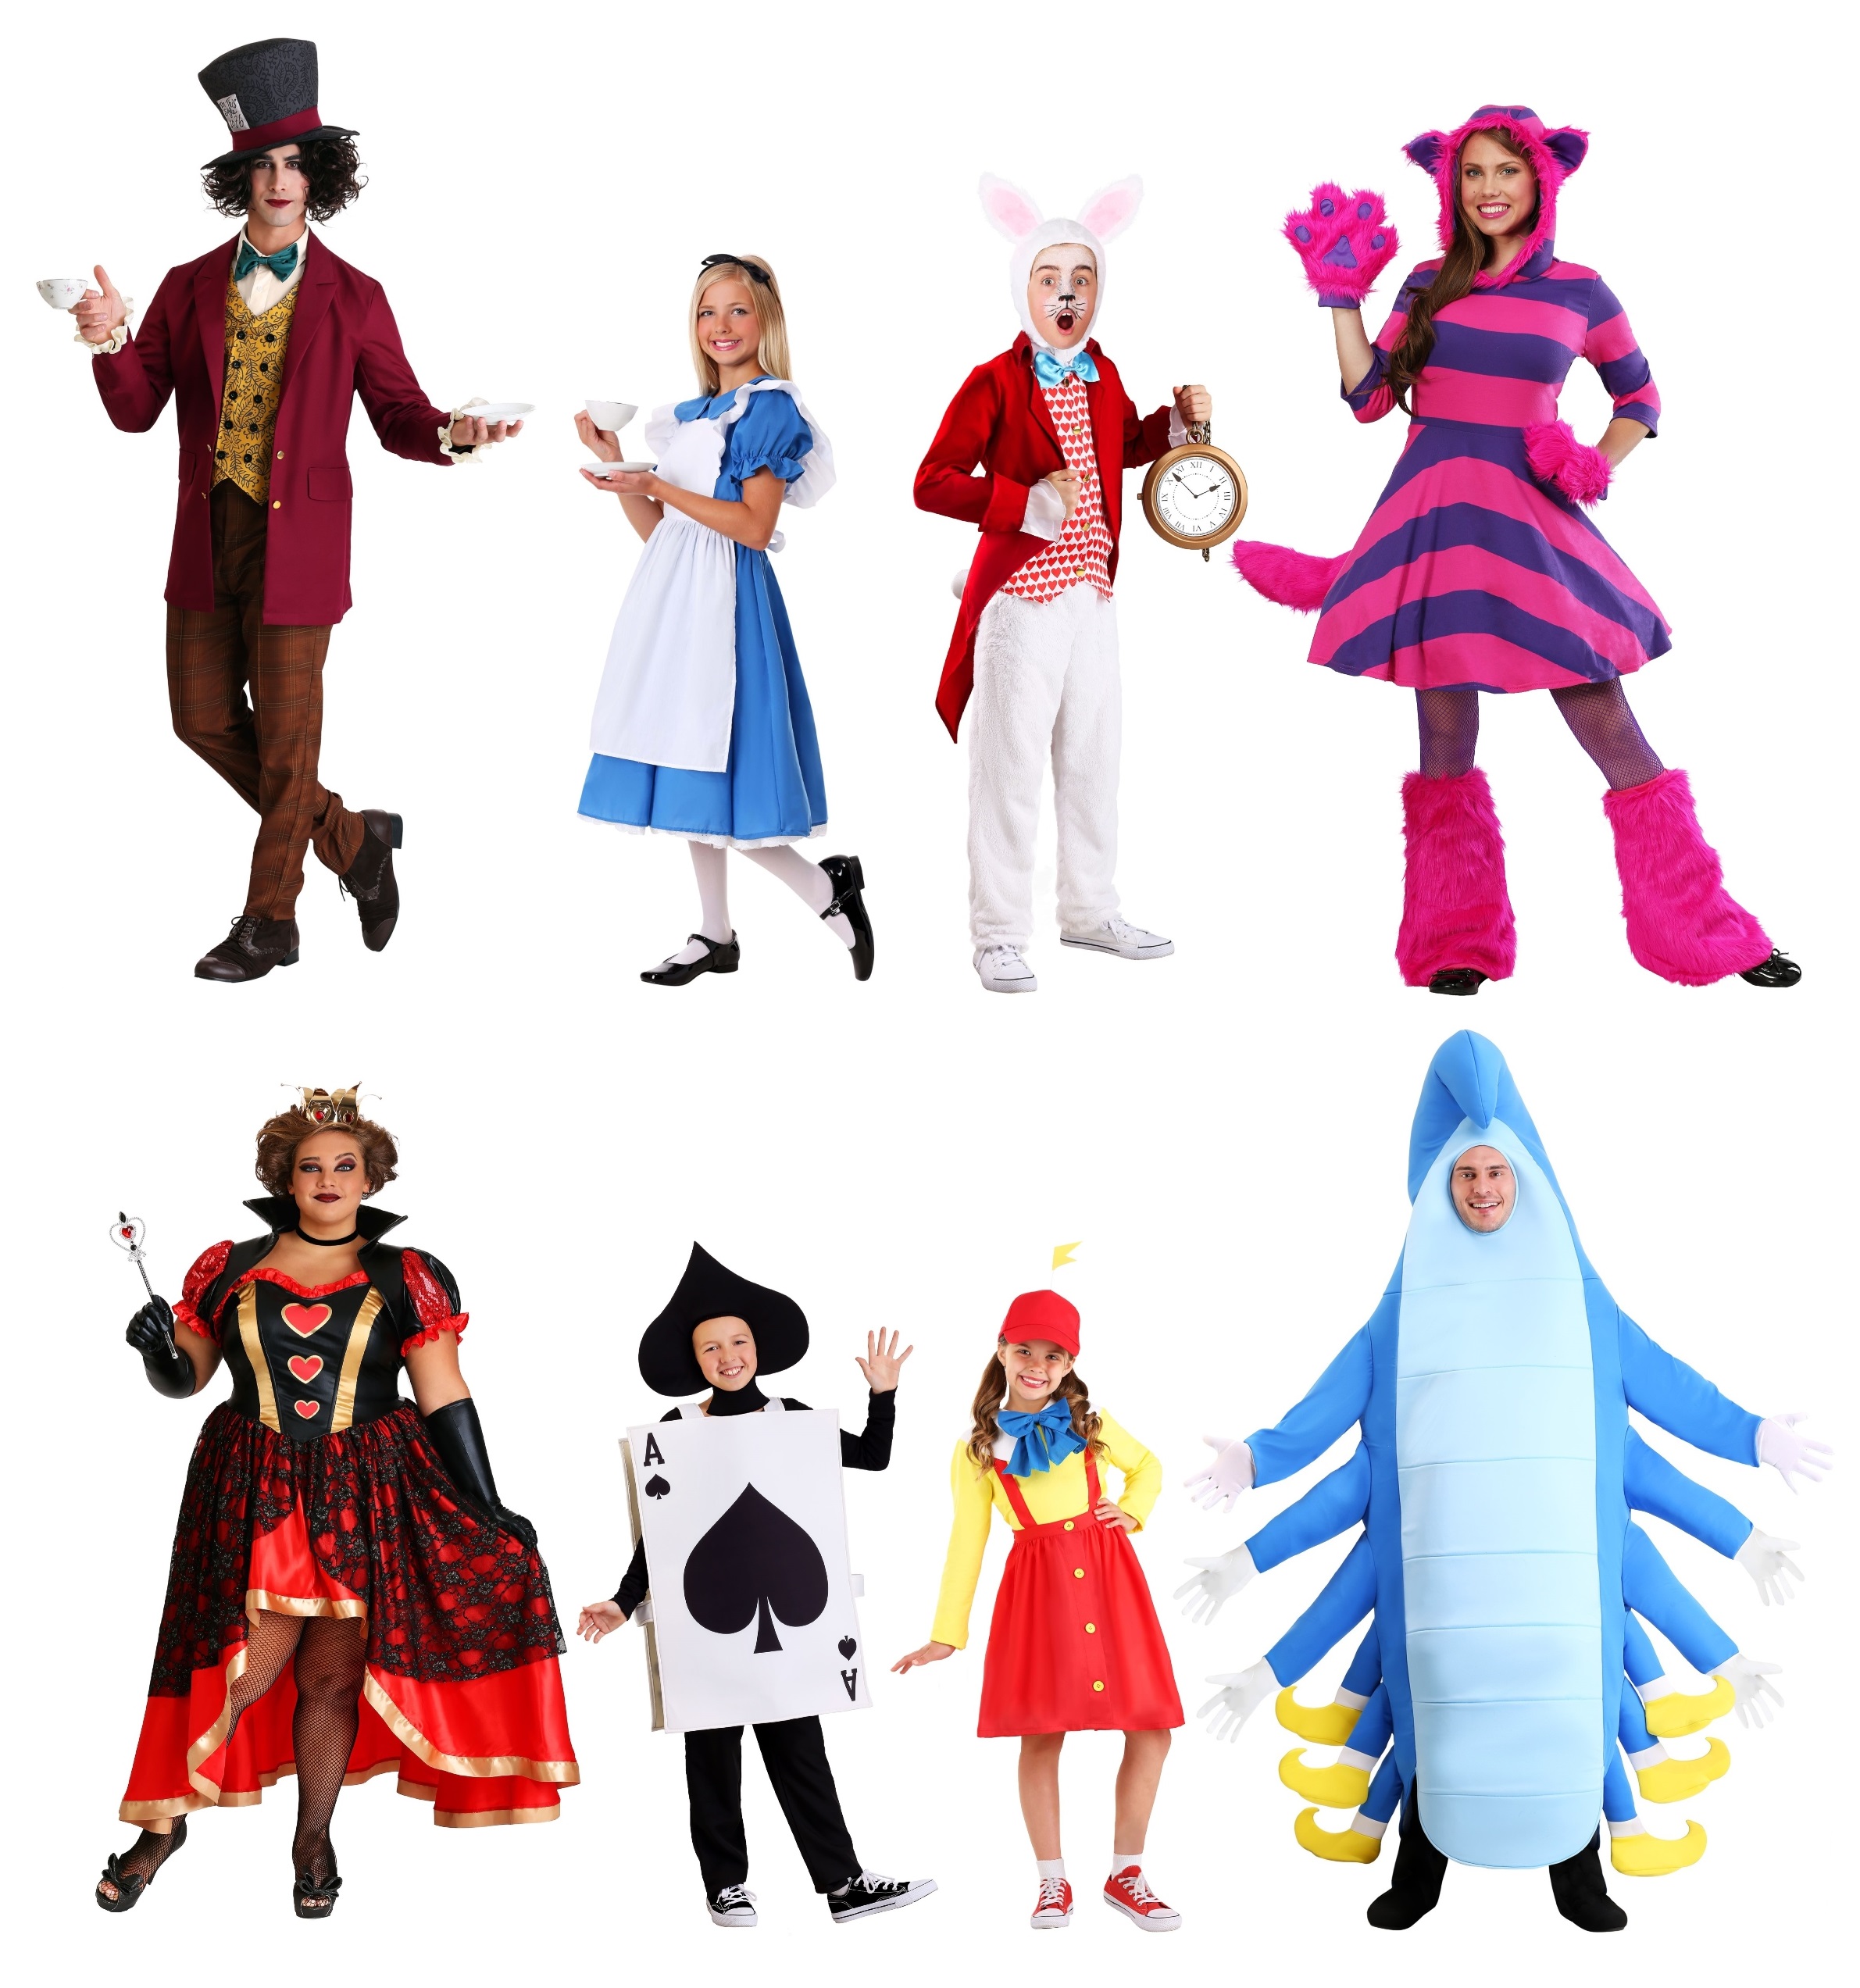 Halloween Costume Ideas for Large Groups - HalloweenCostumes.com Blog